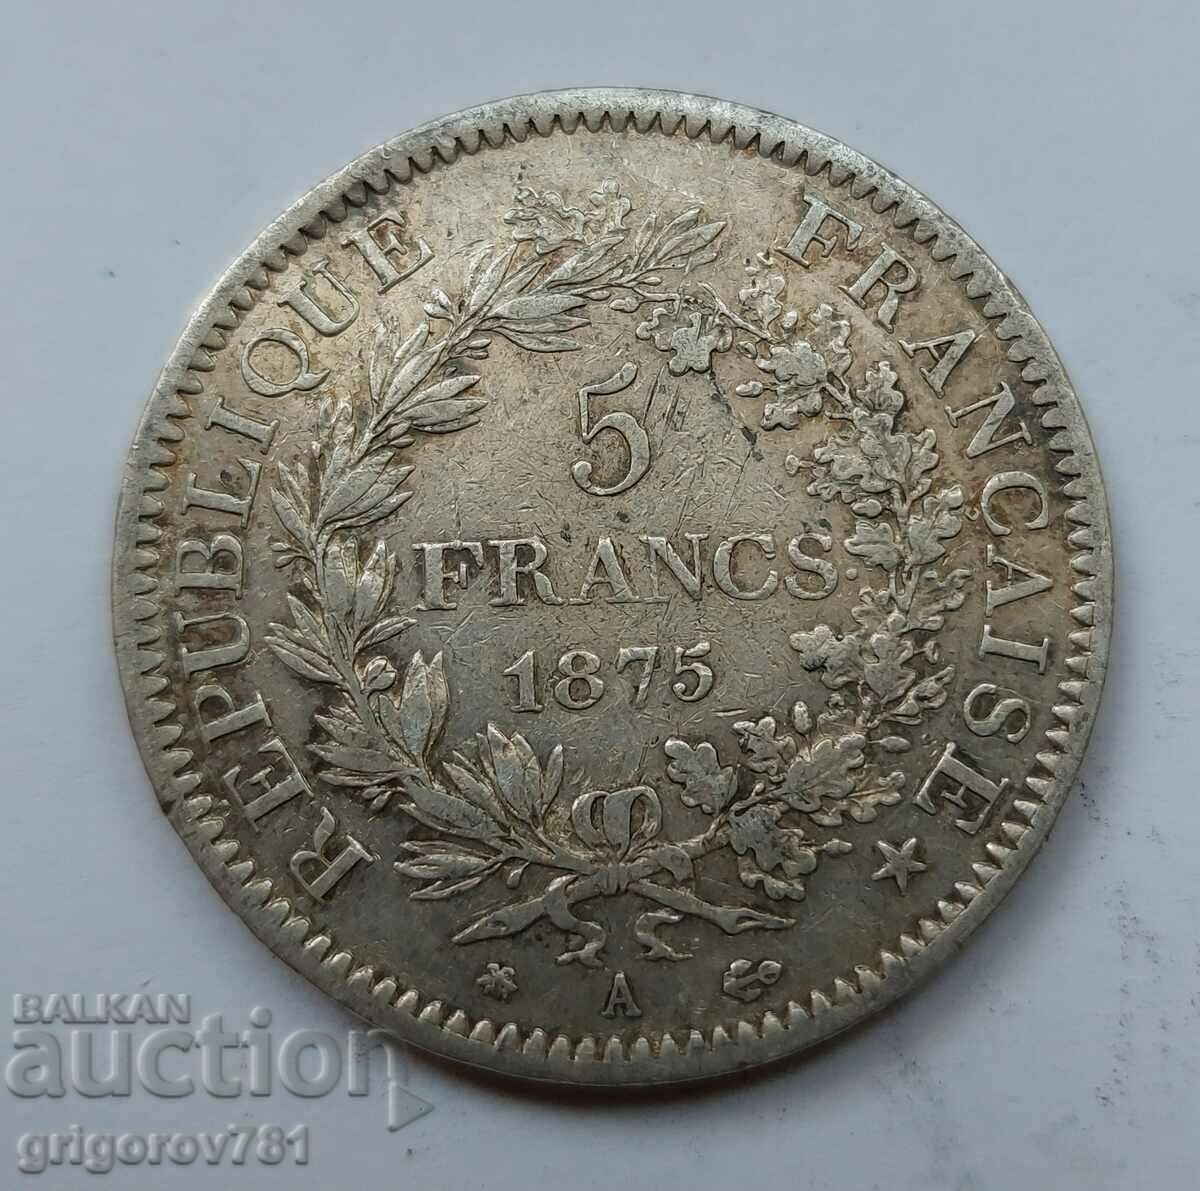 5 Francs Silver France 1875 A - Silver Coin #204